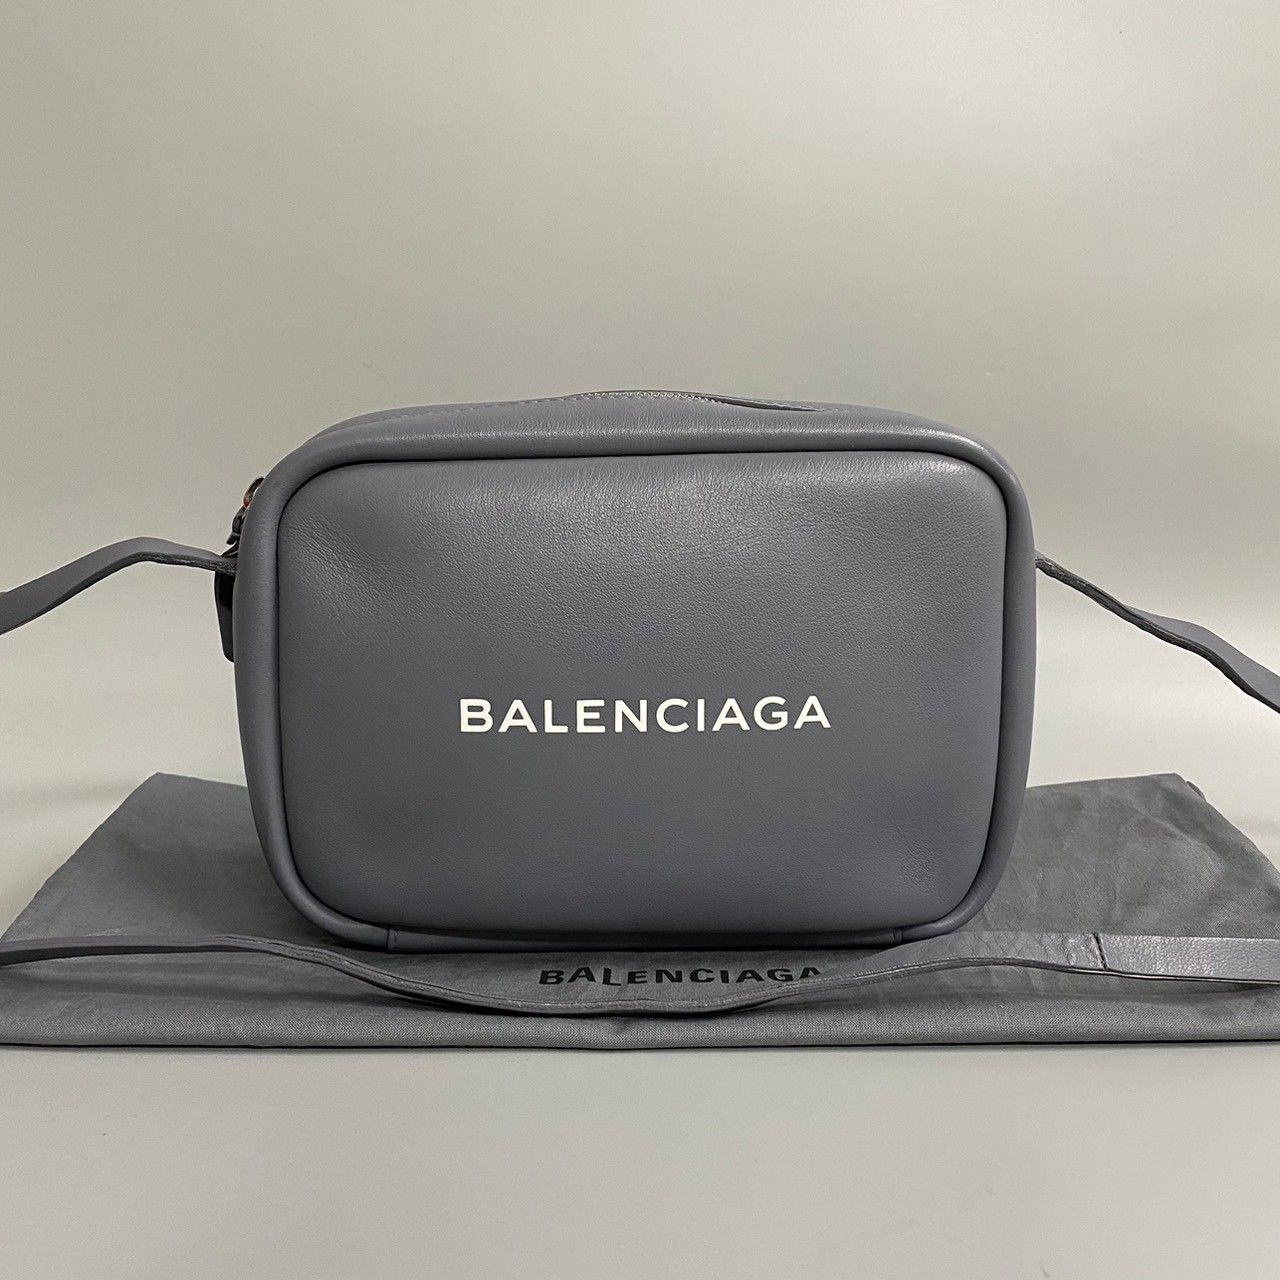 Balenciaga バレンシアガ レザー ショルダーバッグ 黒 - ファッション